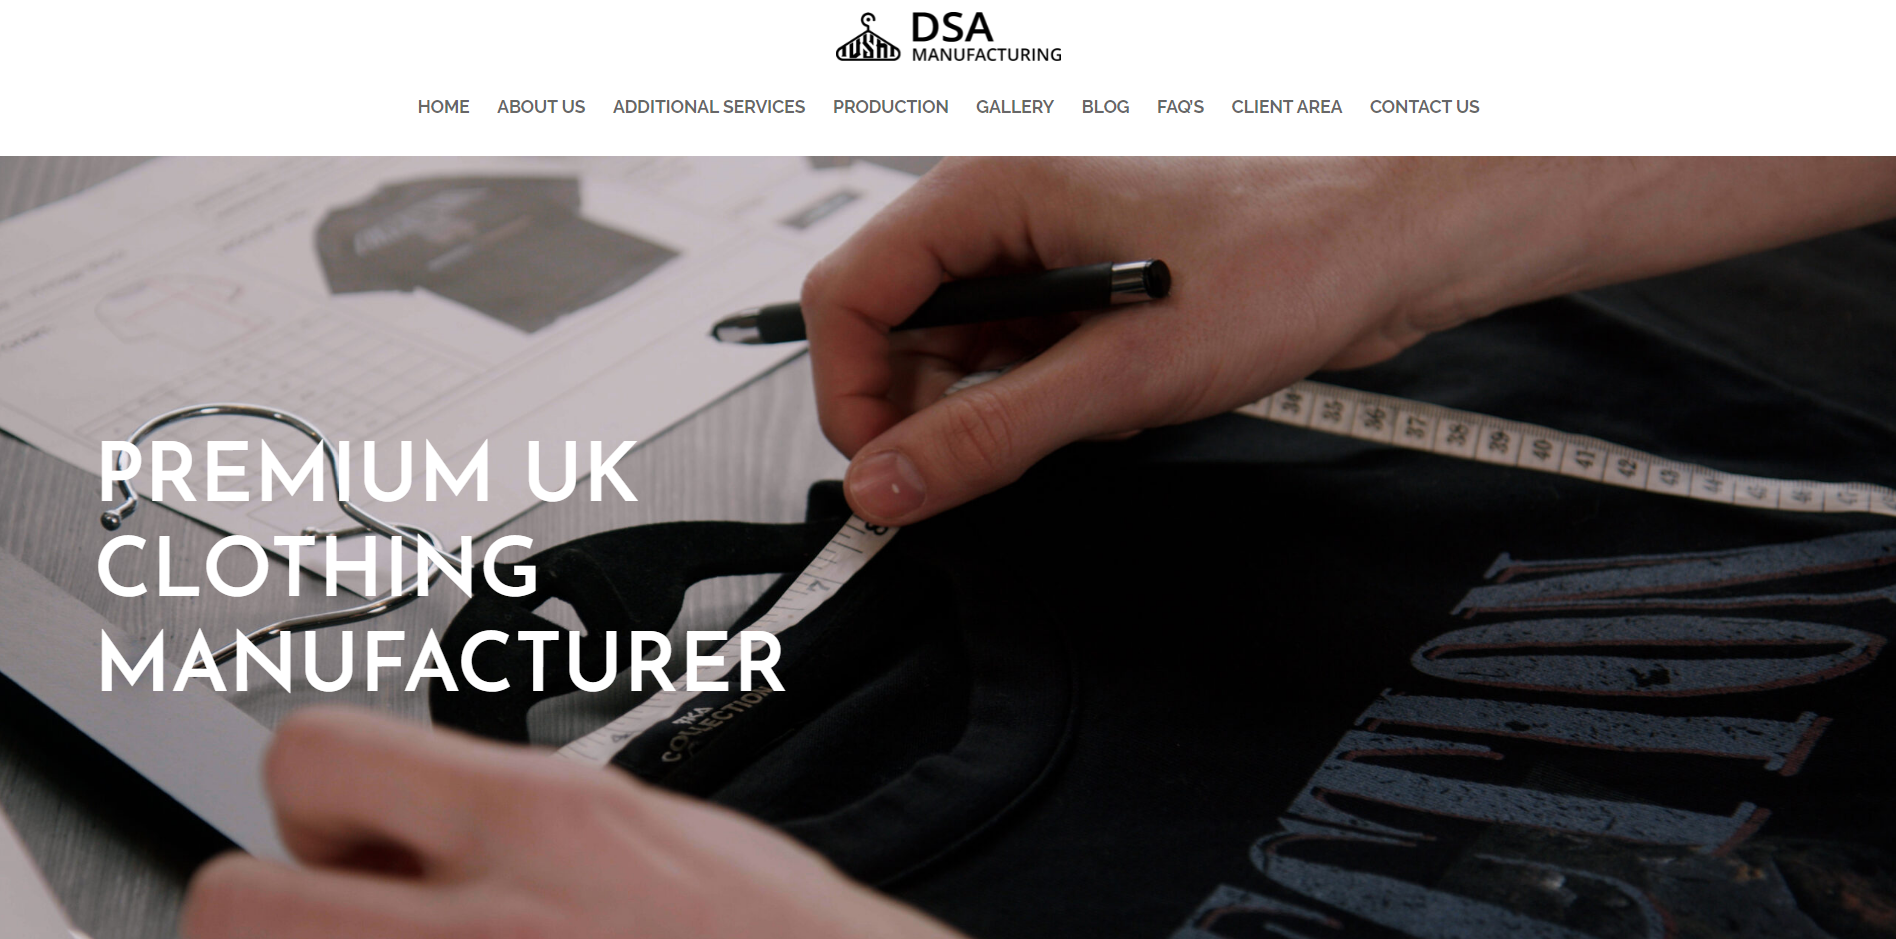 DSA Manufacturing